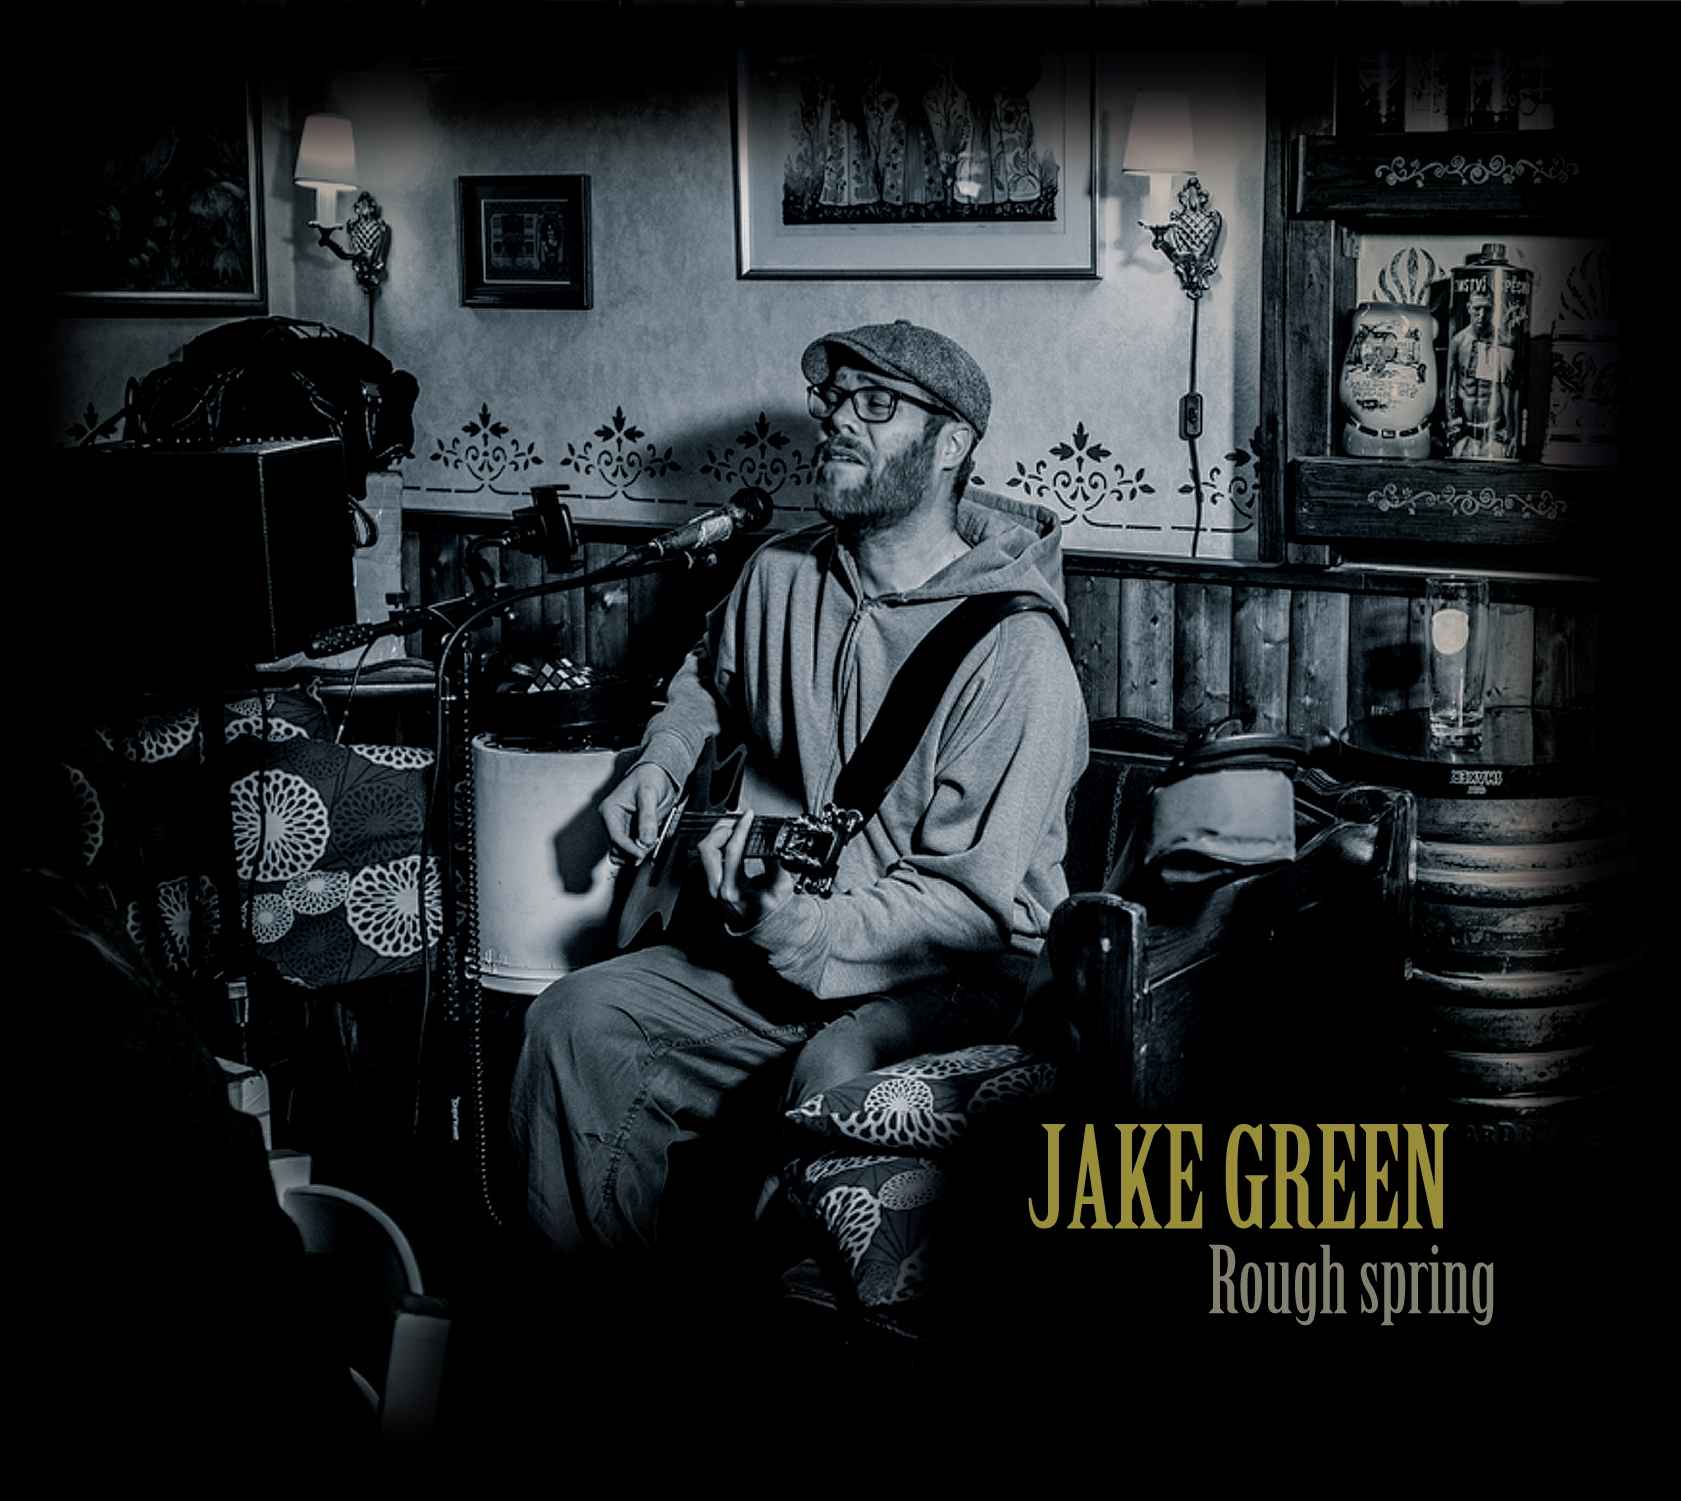 Jake Green
